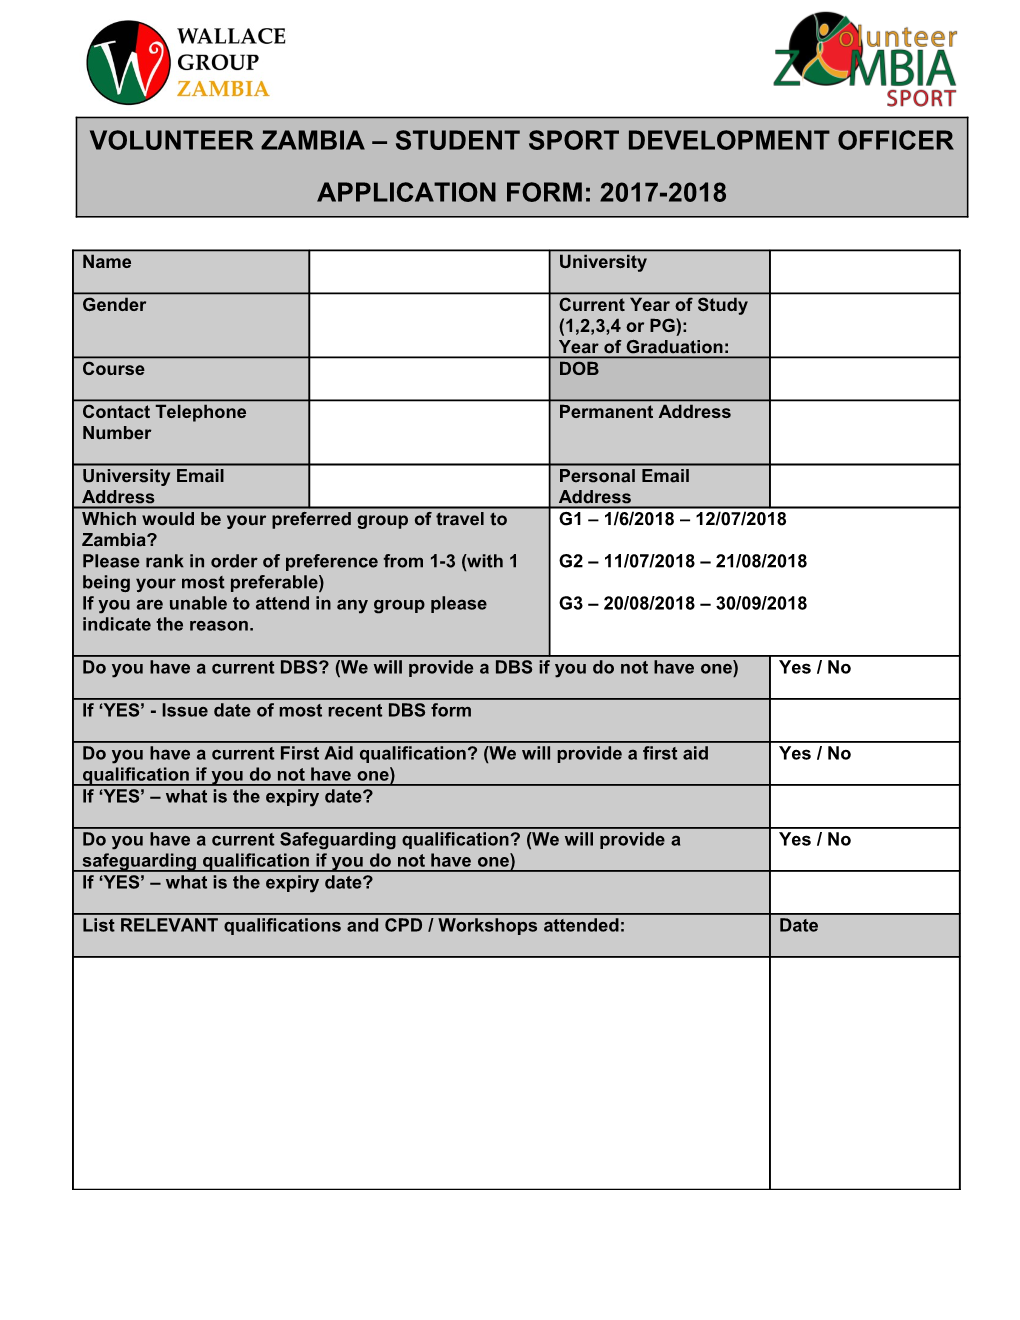 Volunteer Zambia Student Sport Development Officer Application Form 2017-2018